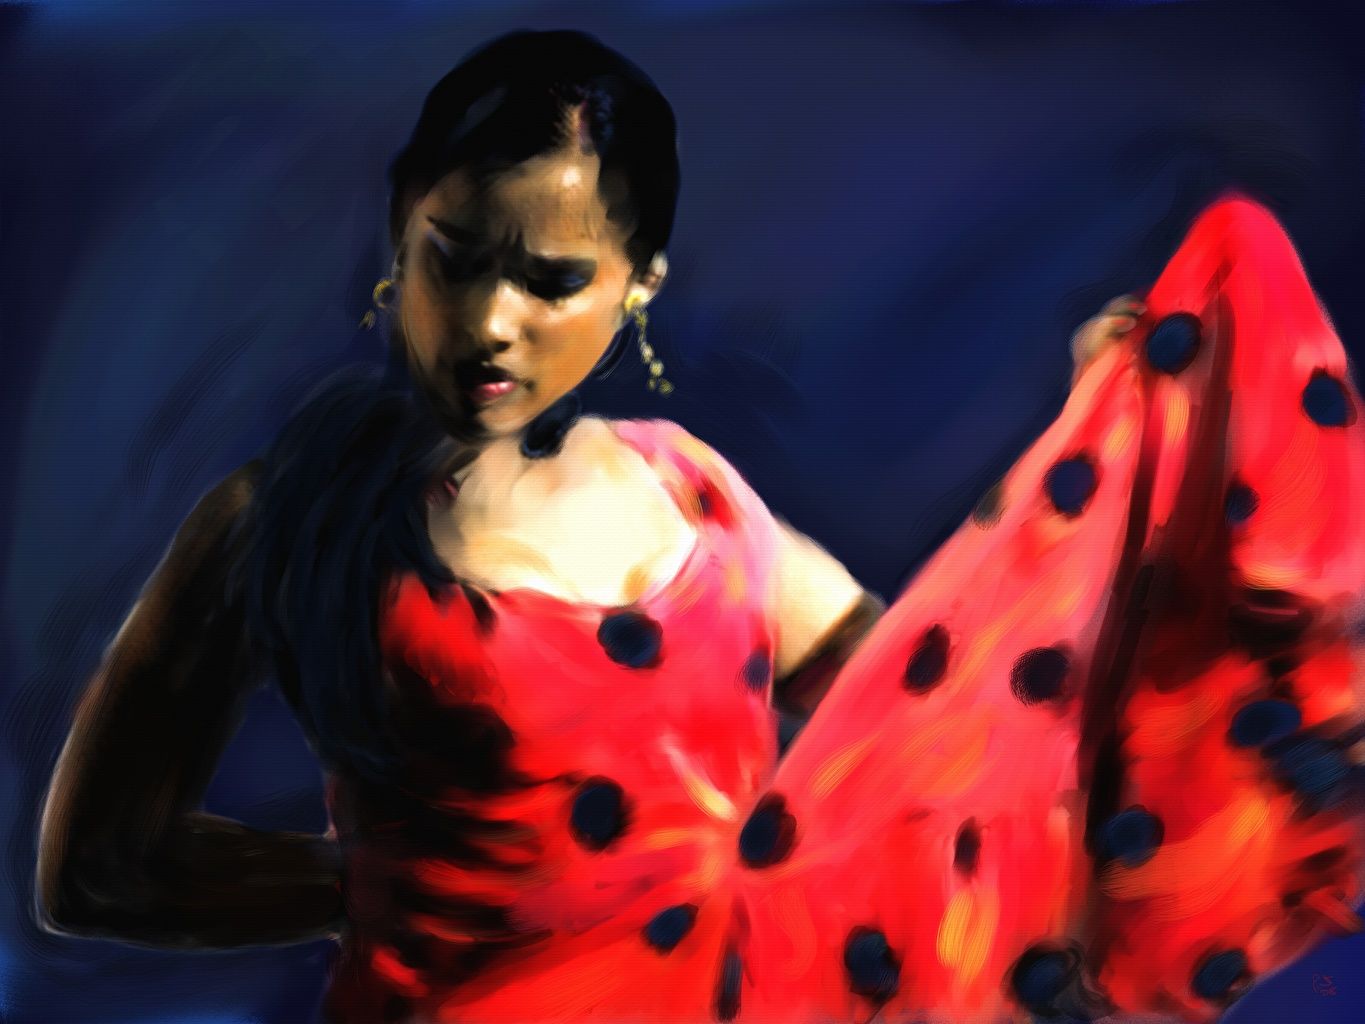 Fondos de pantalla Baile La bailarina de flamenco Chicas Arte pictórico Pintura Arte